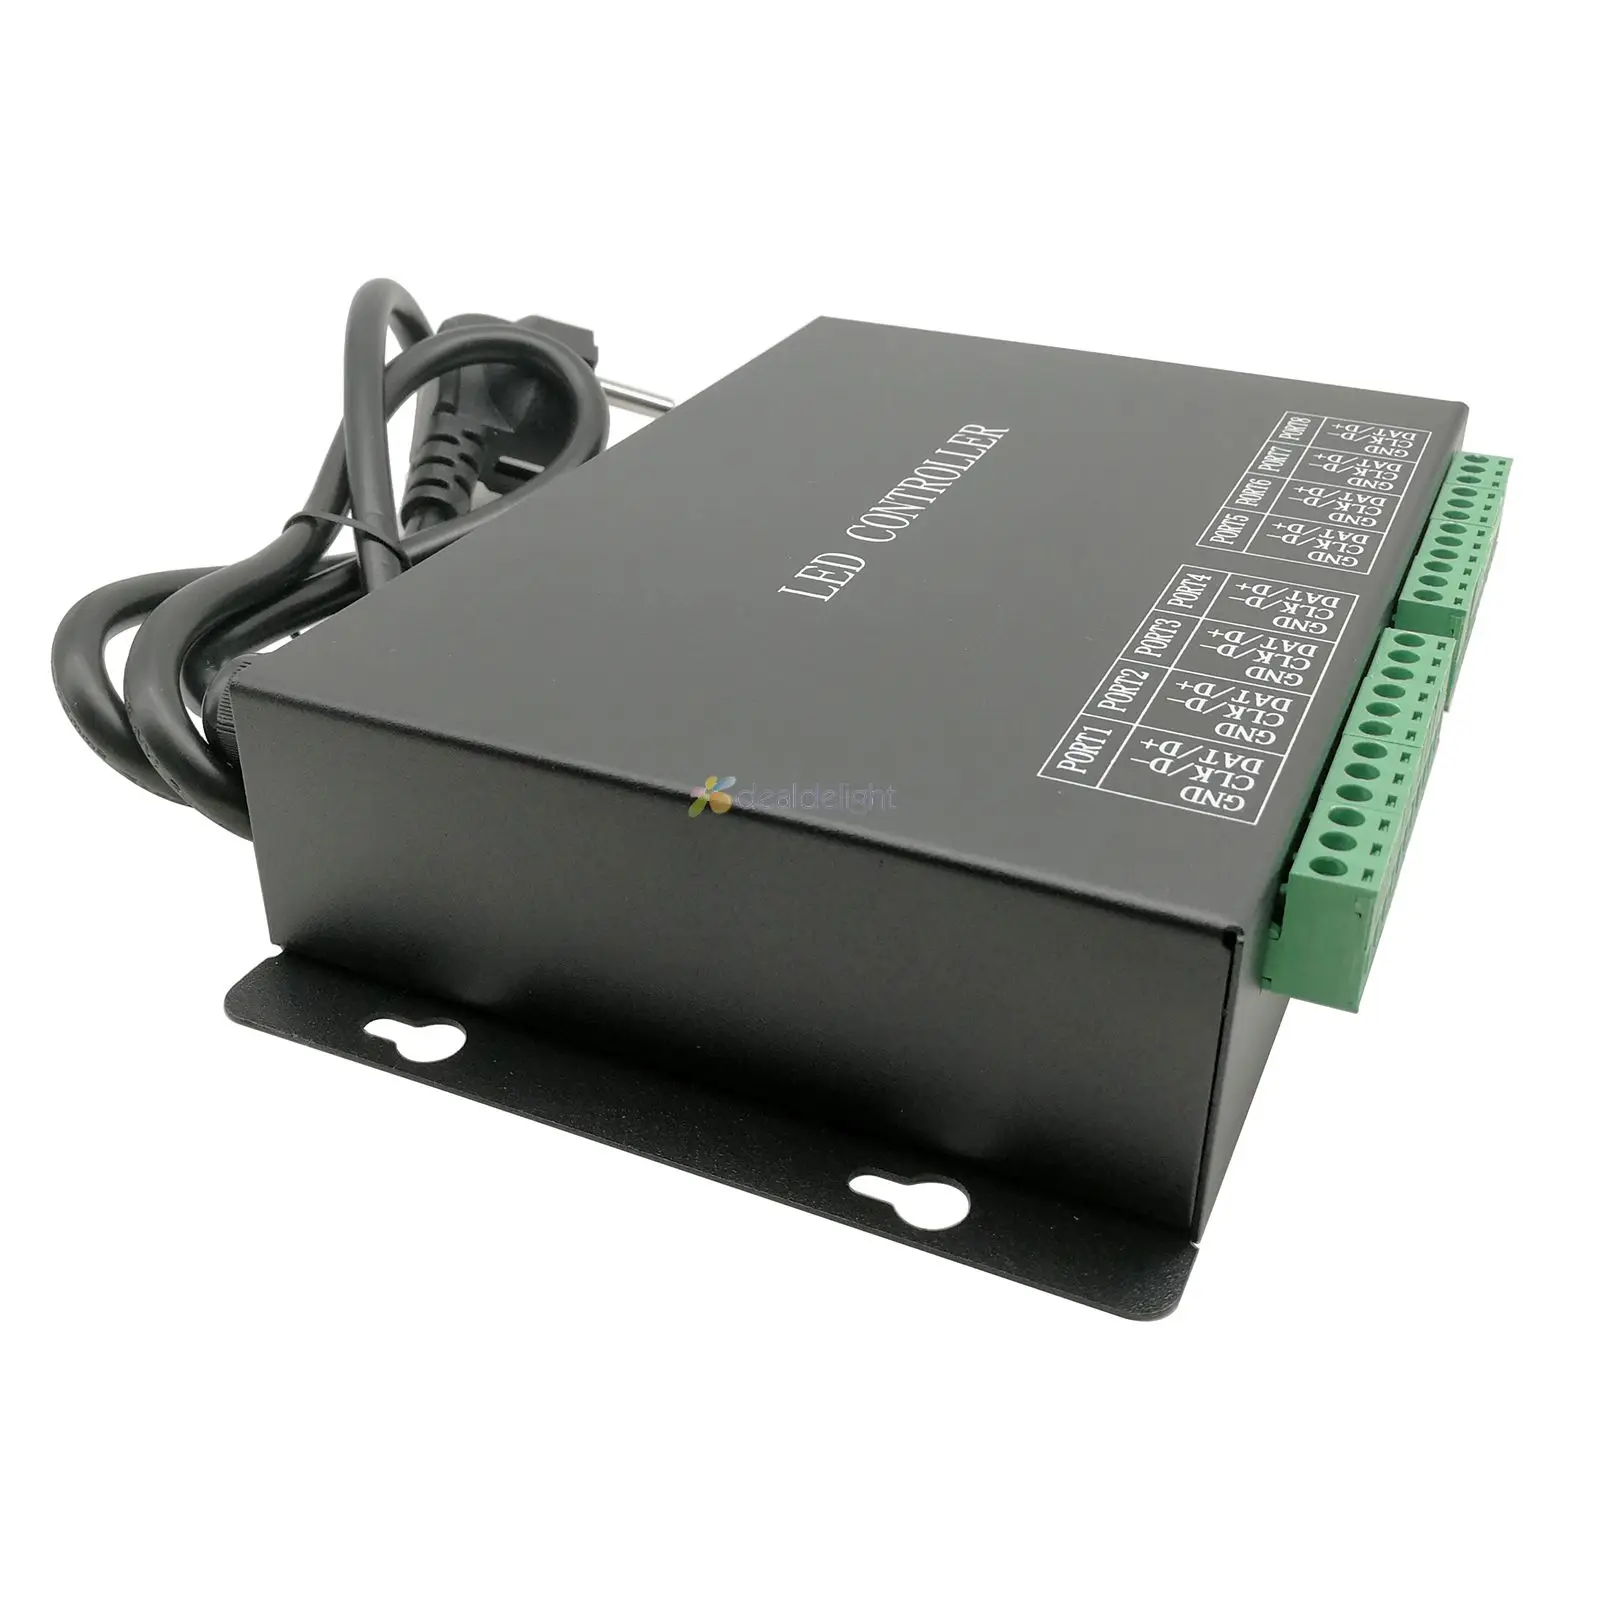 H801RC 8พอร์ตSalve LED Pixel Controllerเครือข่ายคอมพิวเตอร์LED Controller RJ45พอร์ตโปรแกรมDMX Master-Slave Controller